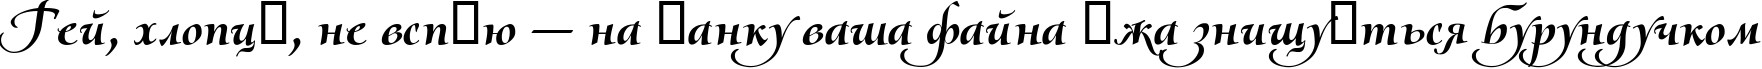 Пример написания шрифтом Olietta script BoldItalic текста на украинском